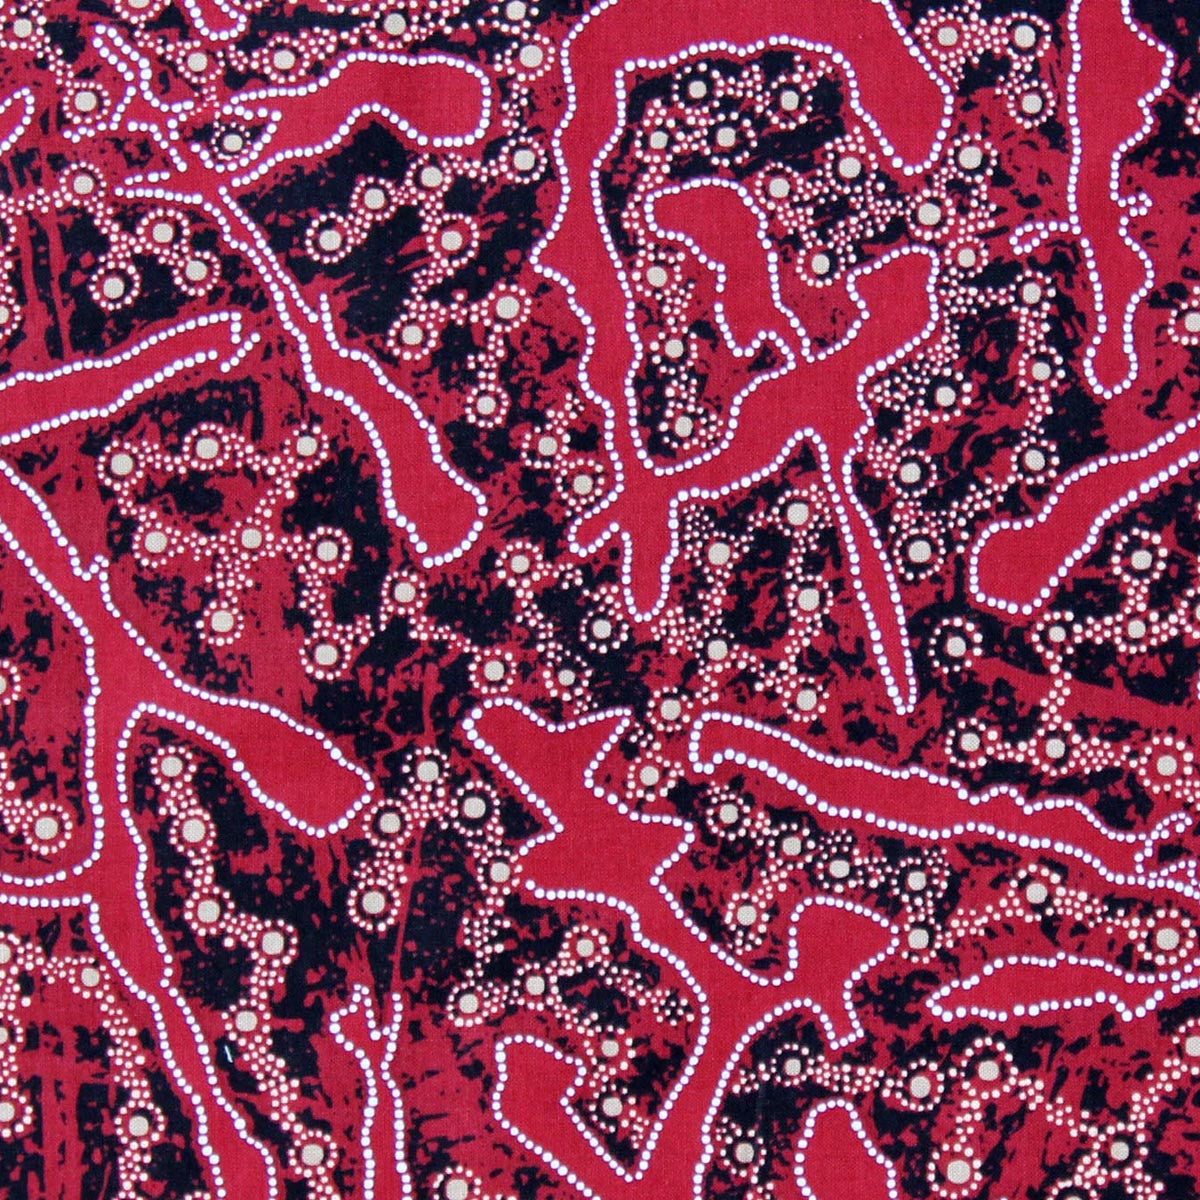 YELLOW BUSH PLUM RED by Aboriginal Artist J. NUNGARRAYI